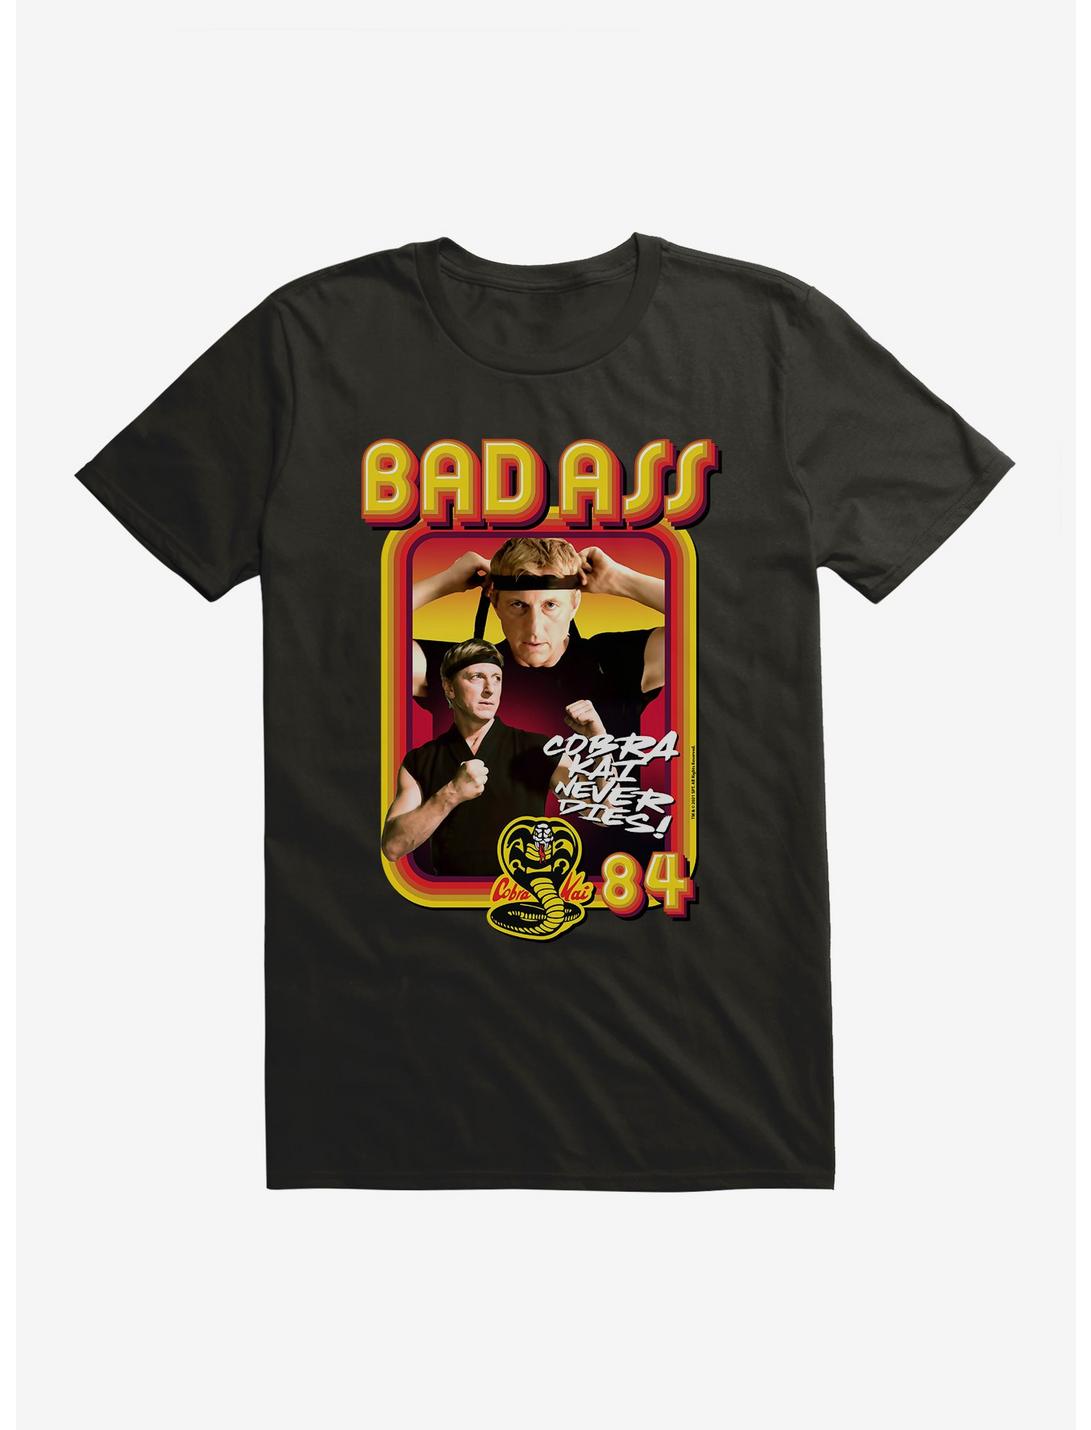 Cobra Kai Never Dies! Badass 84 T-Shirt, , hi-res